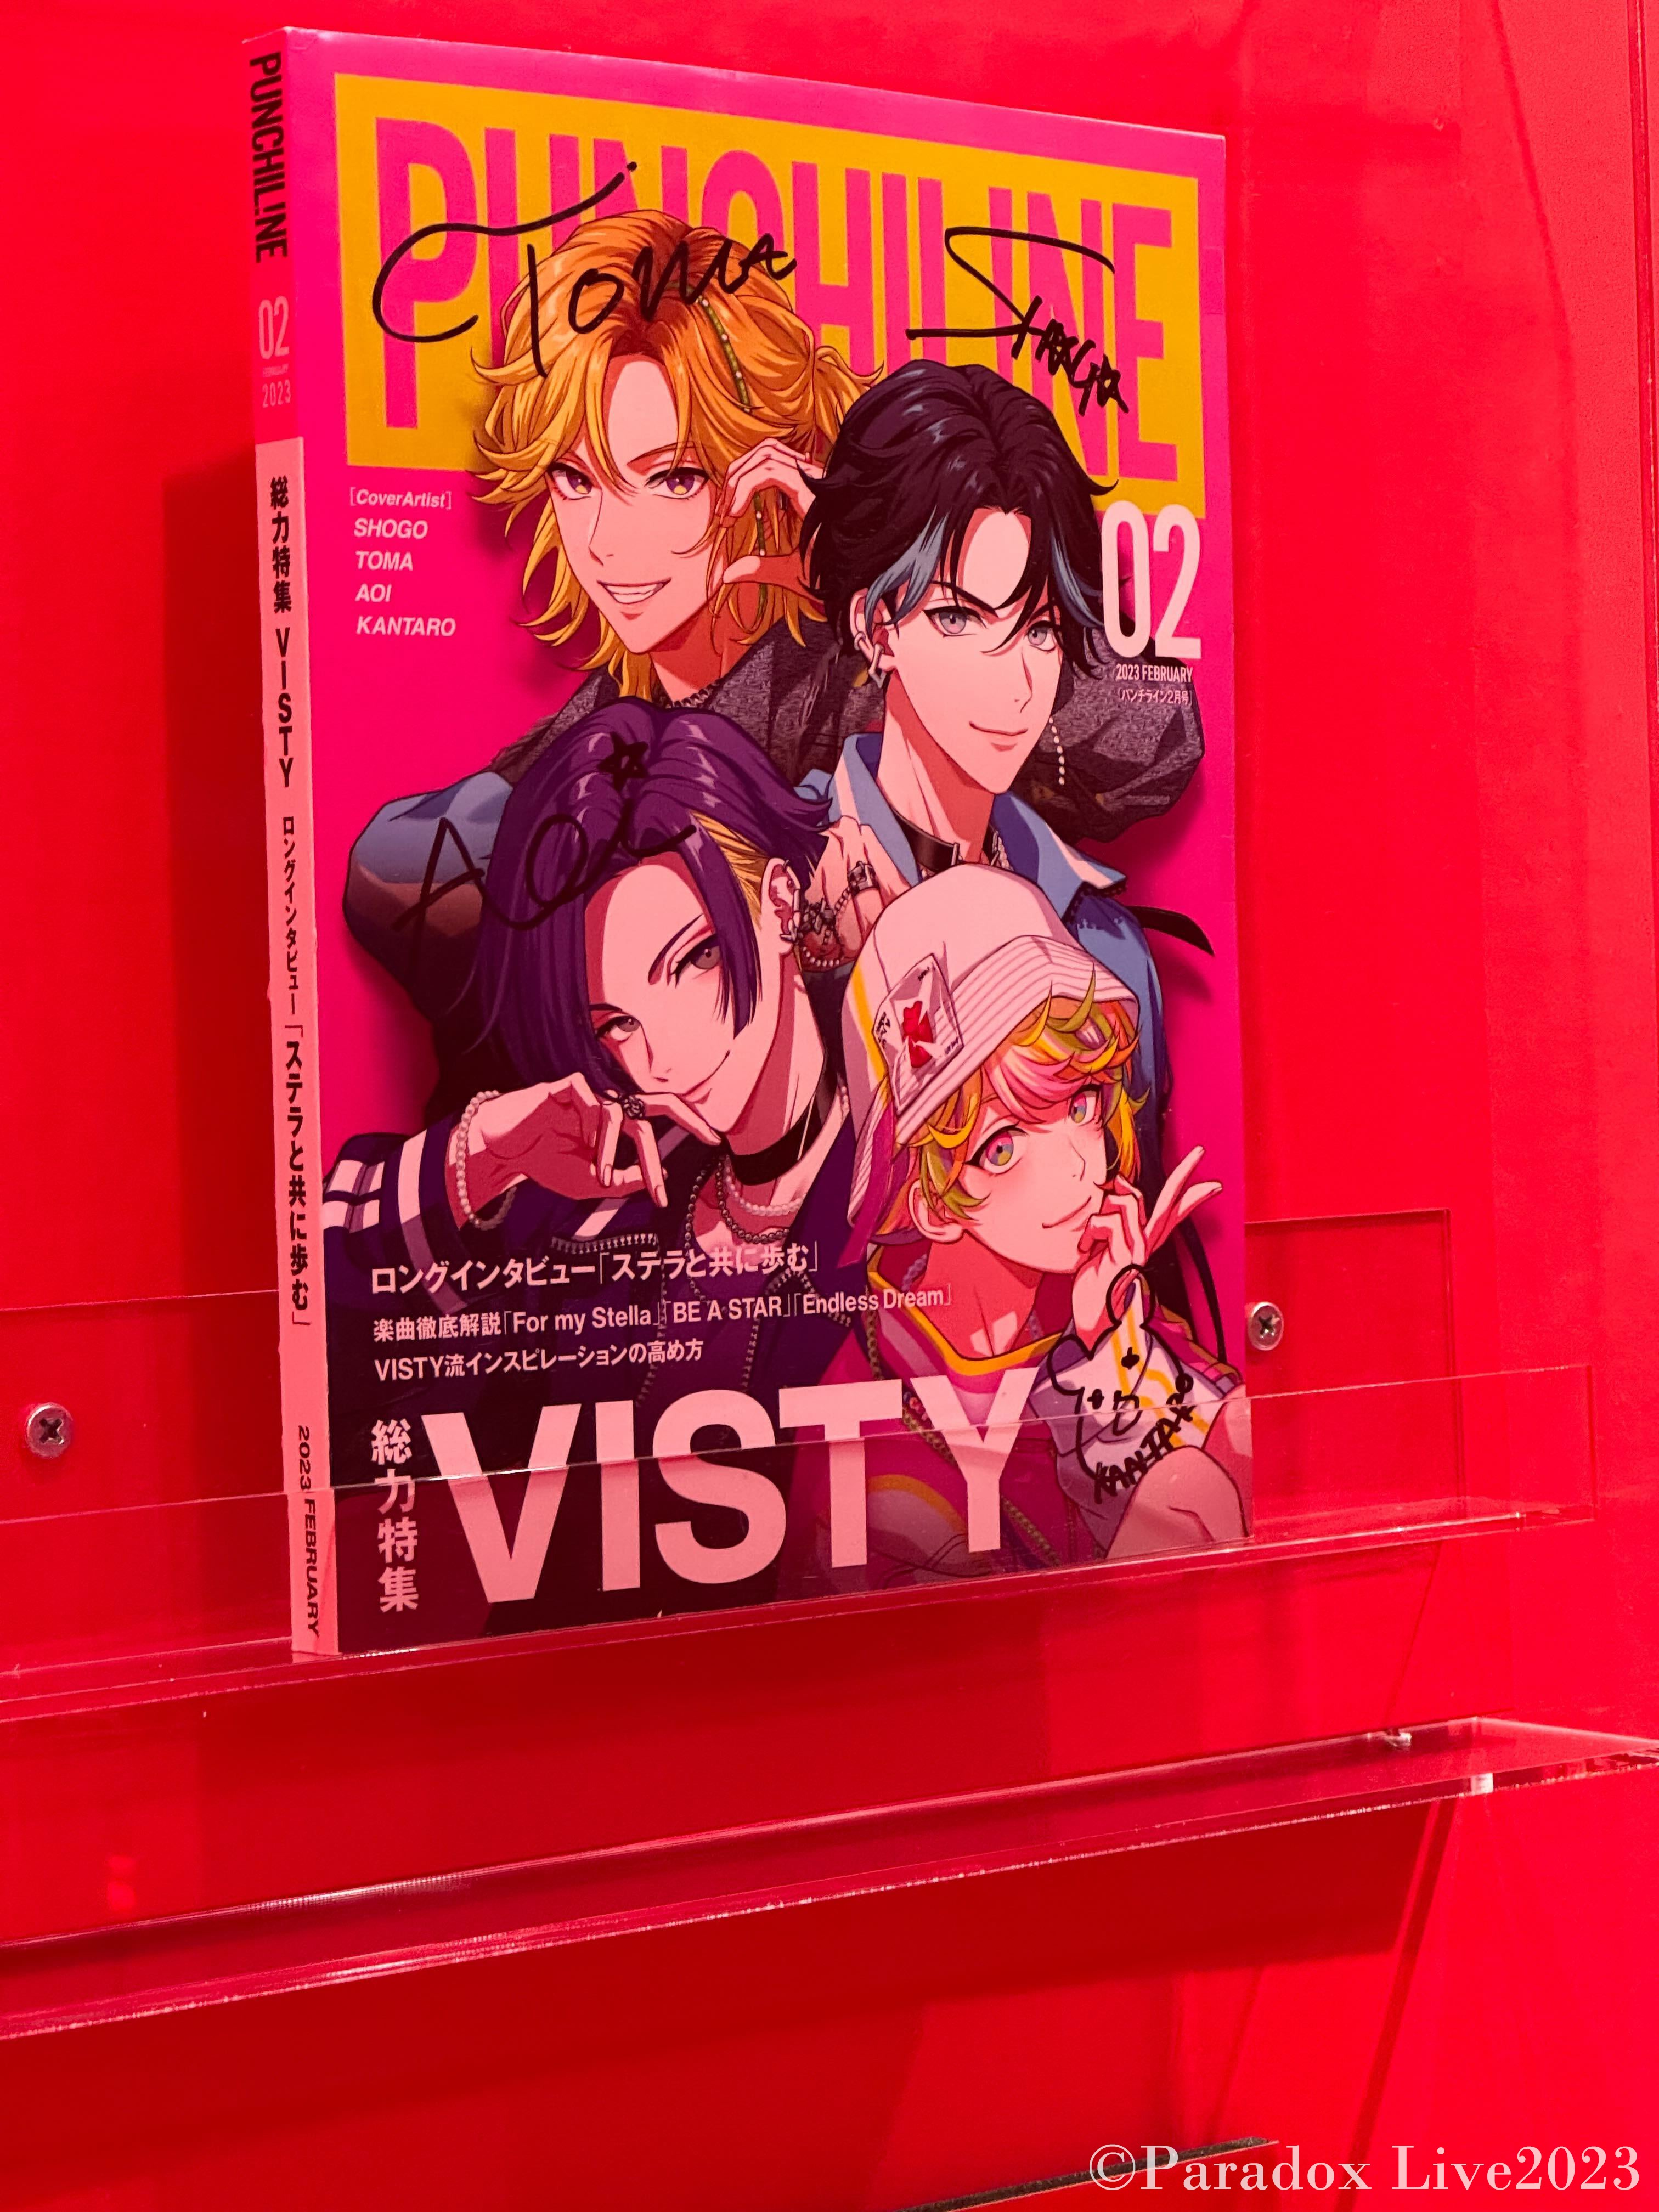 VISTY's magazine cover